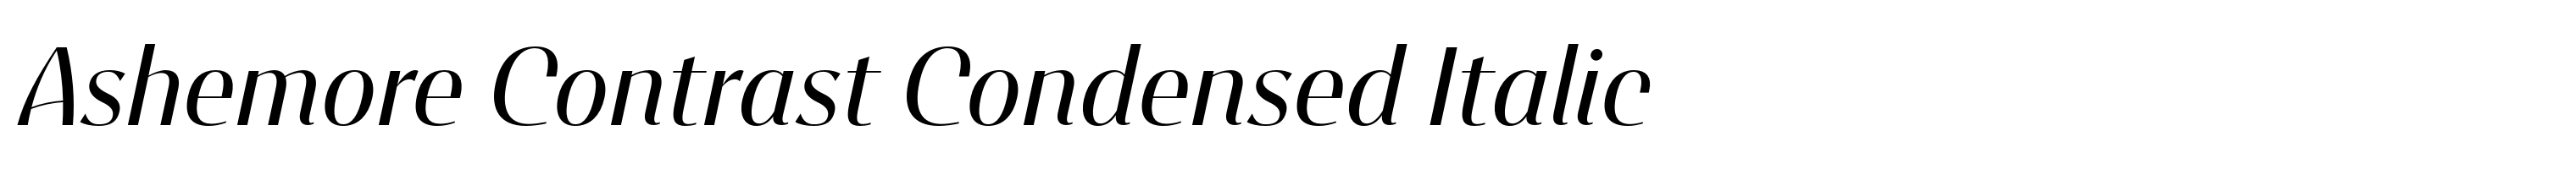 Ashemore Contrast Condensed Italic